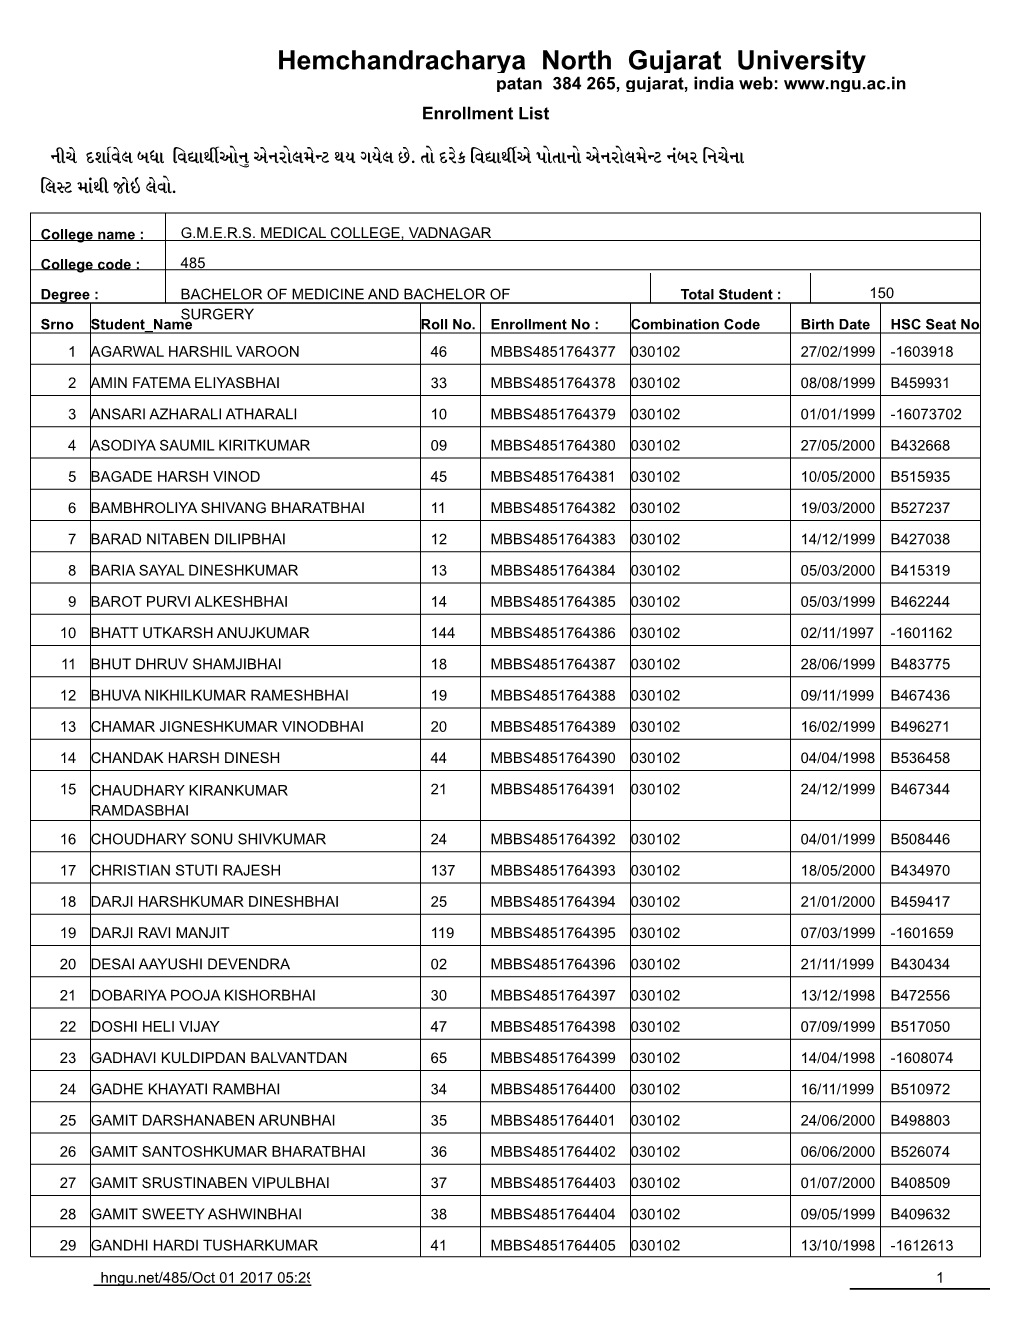 Hemchandracharya North Gujarat University Patan 384 265, Gujarat, India Web: Enrollment List